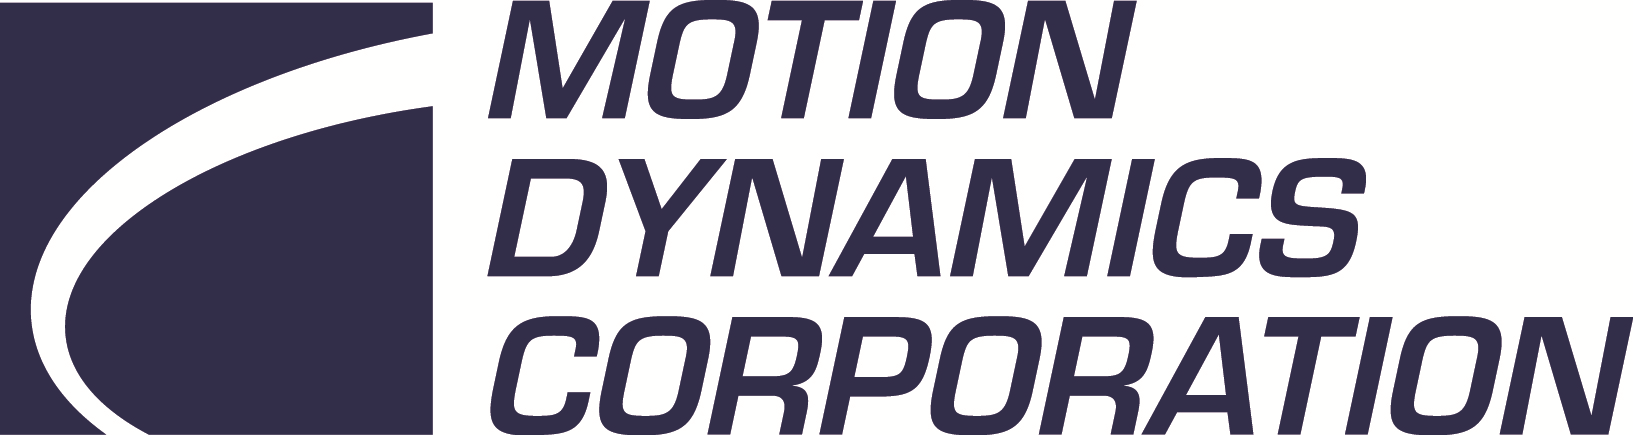 Motion Dynamics Corporation logo